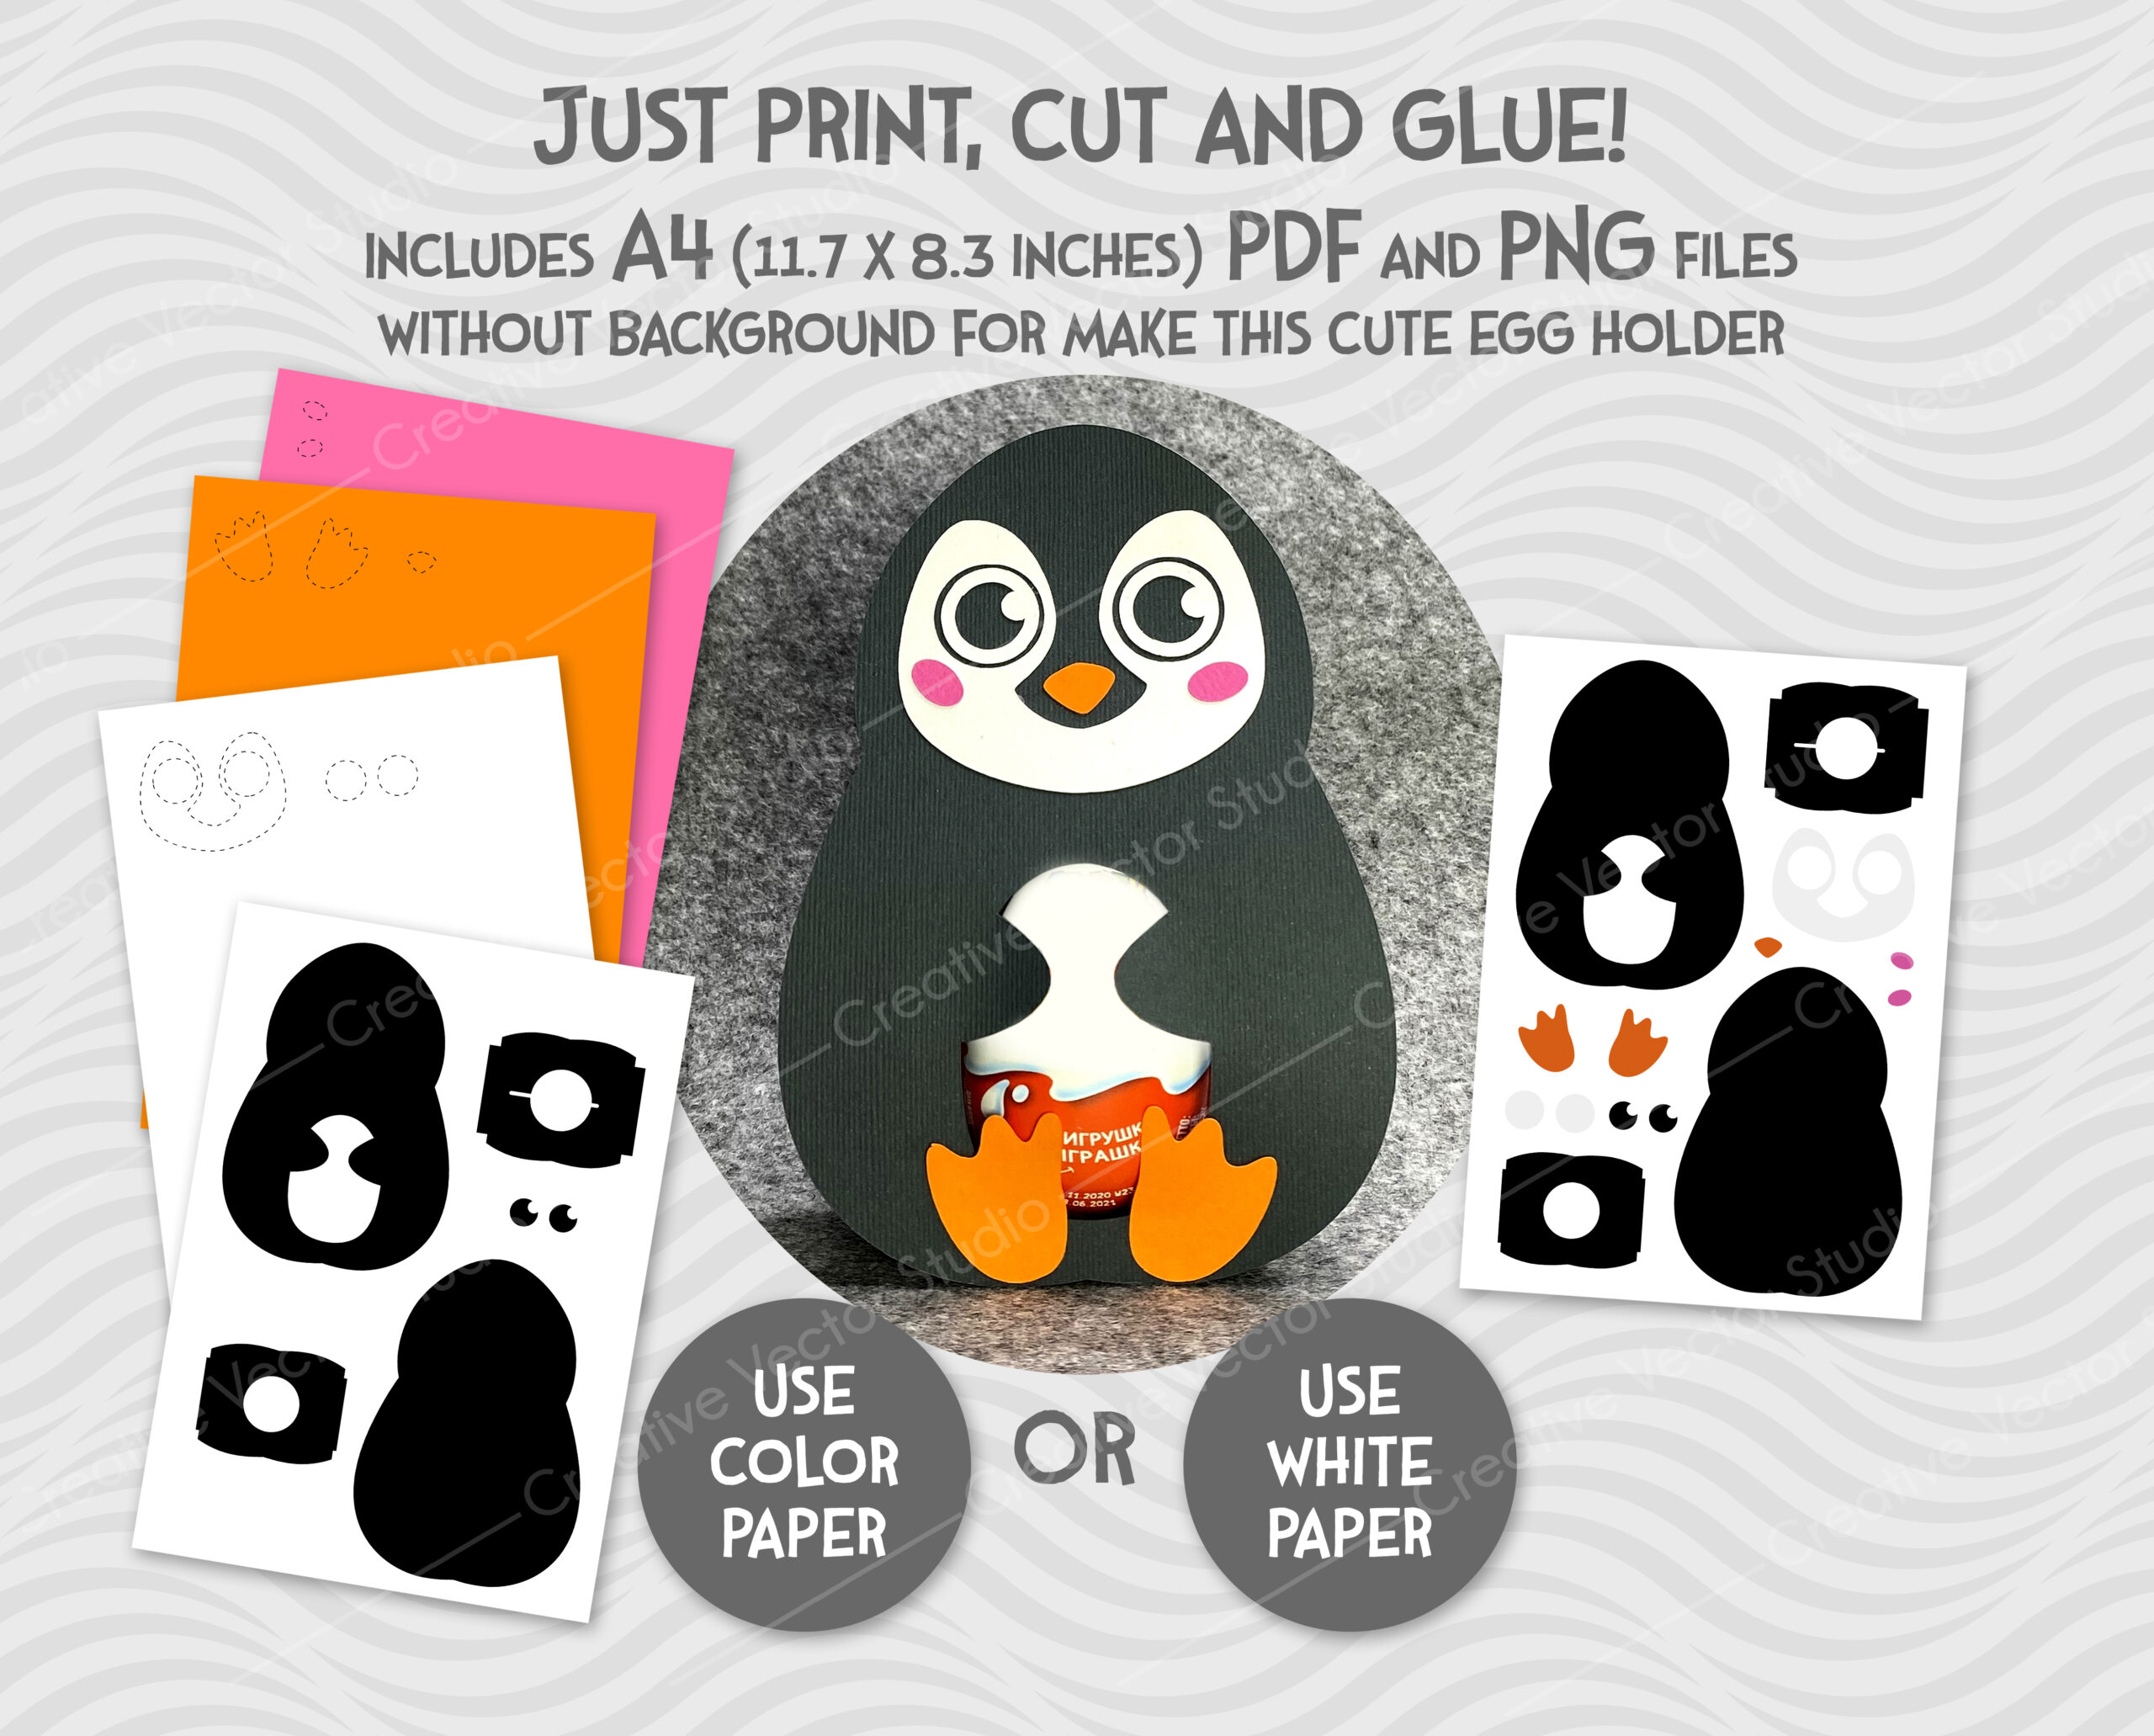 https://creative-vector-studio.com/wp-content/uploads/2021/02/egg-holder-penguin-svg-paper-template-scaled.jpg